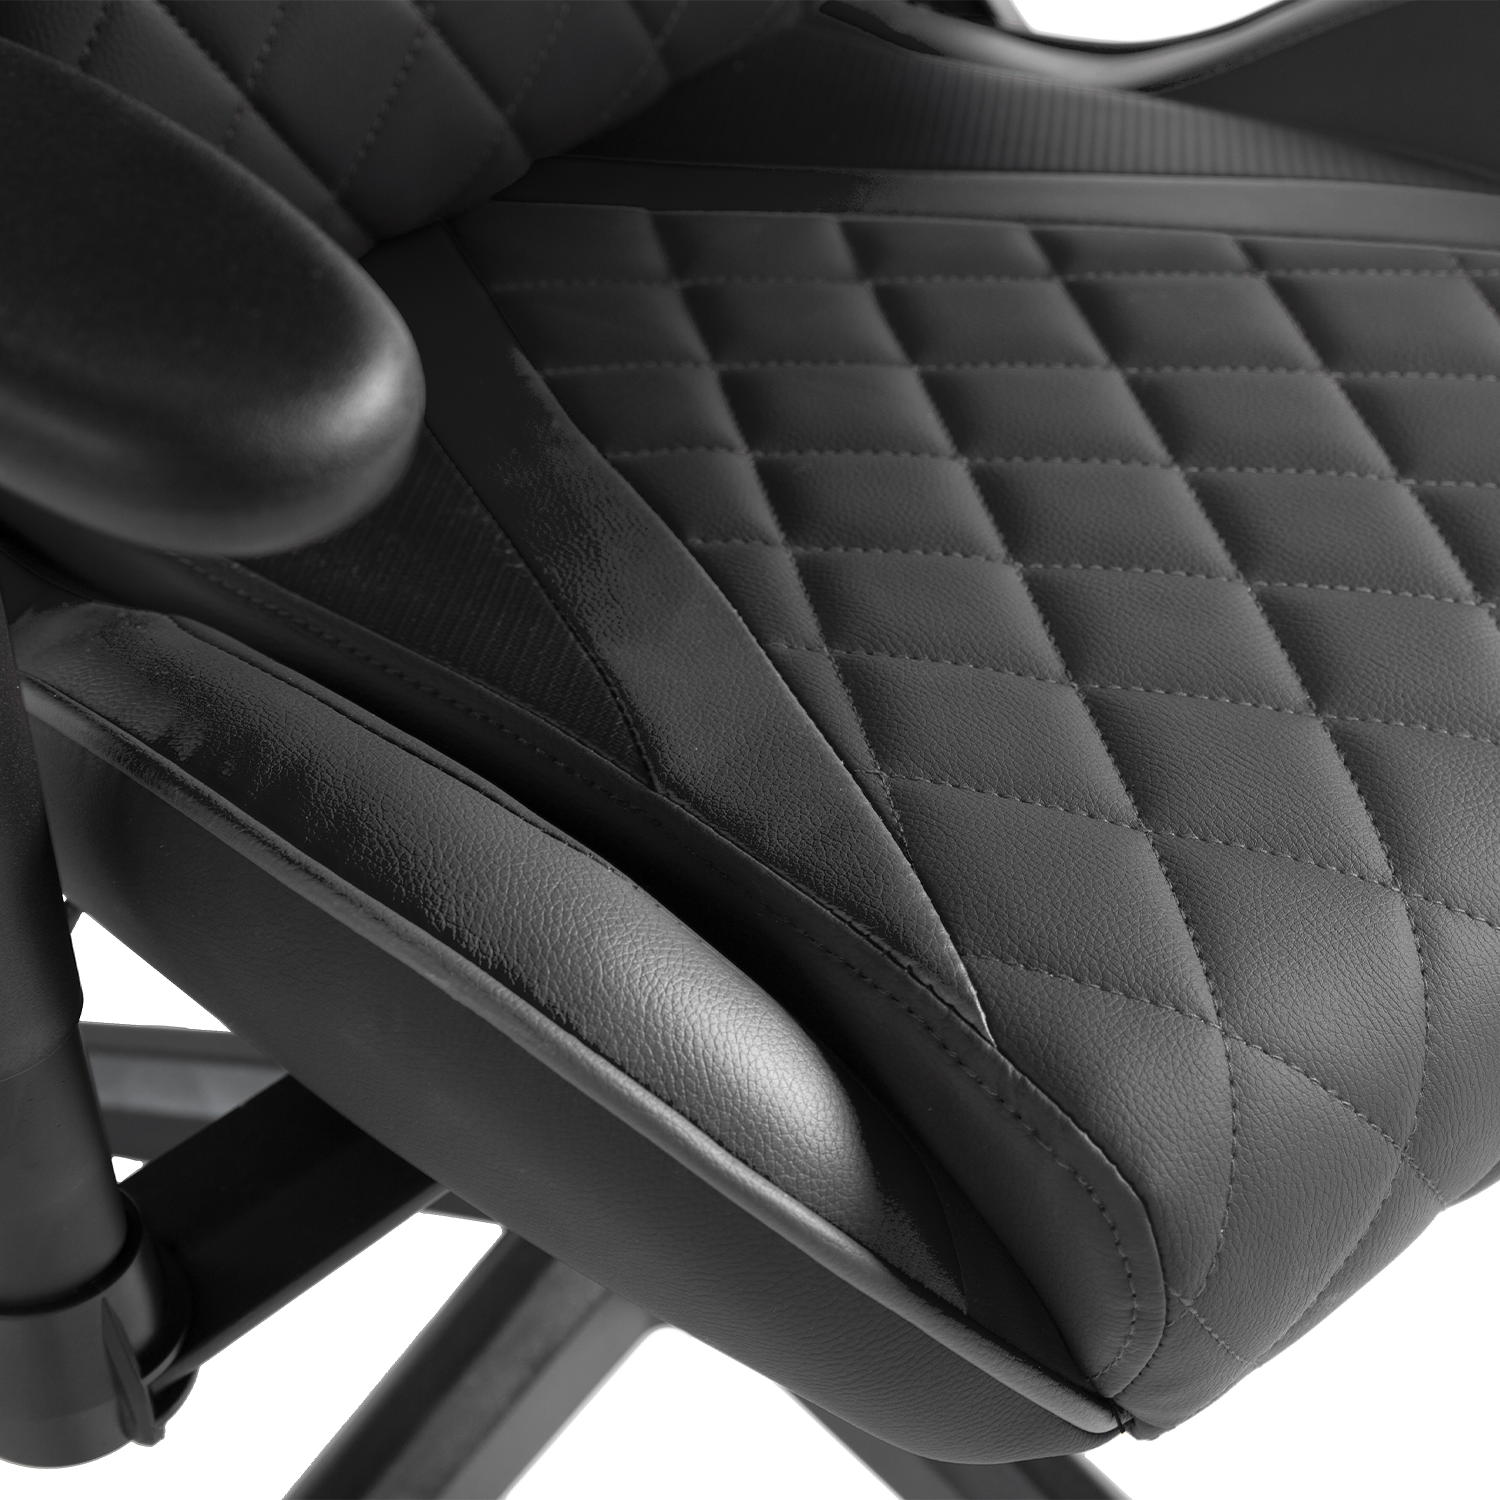 Cadeira Gamer Redragon Gaia C211-B - Preto (Caixa Danificada)